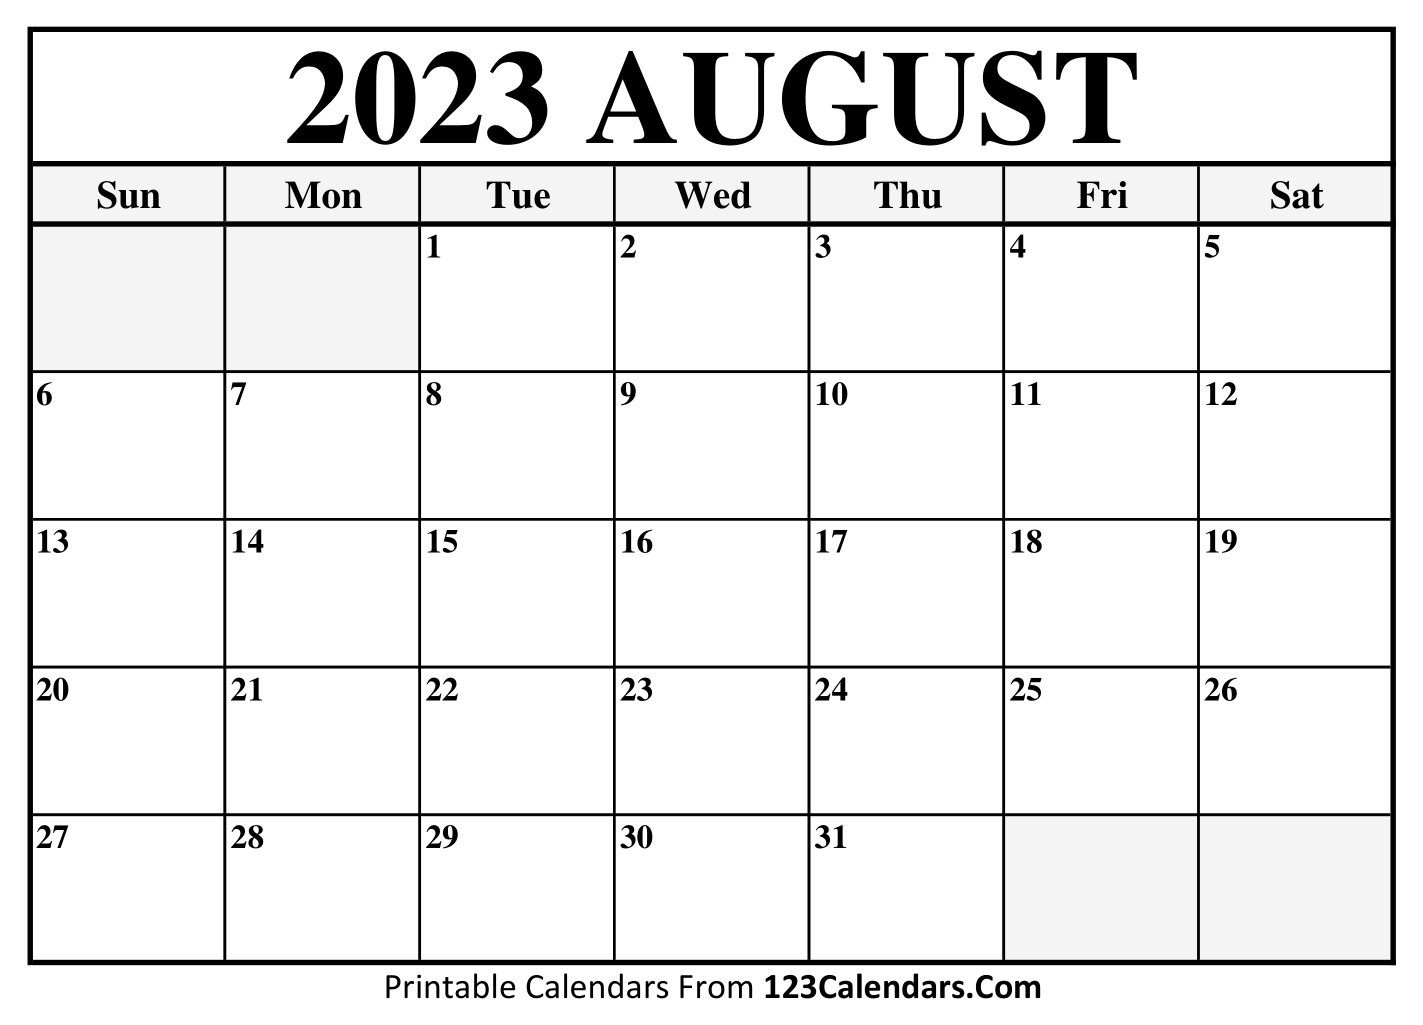 august-2023-calendar-monthly-printable-calendars-2023